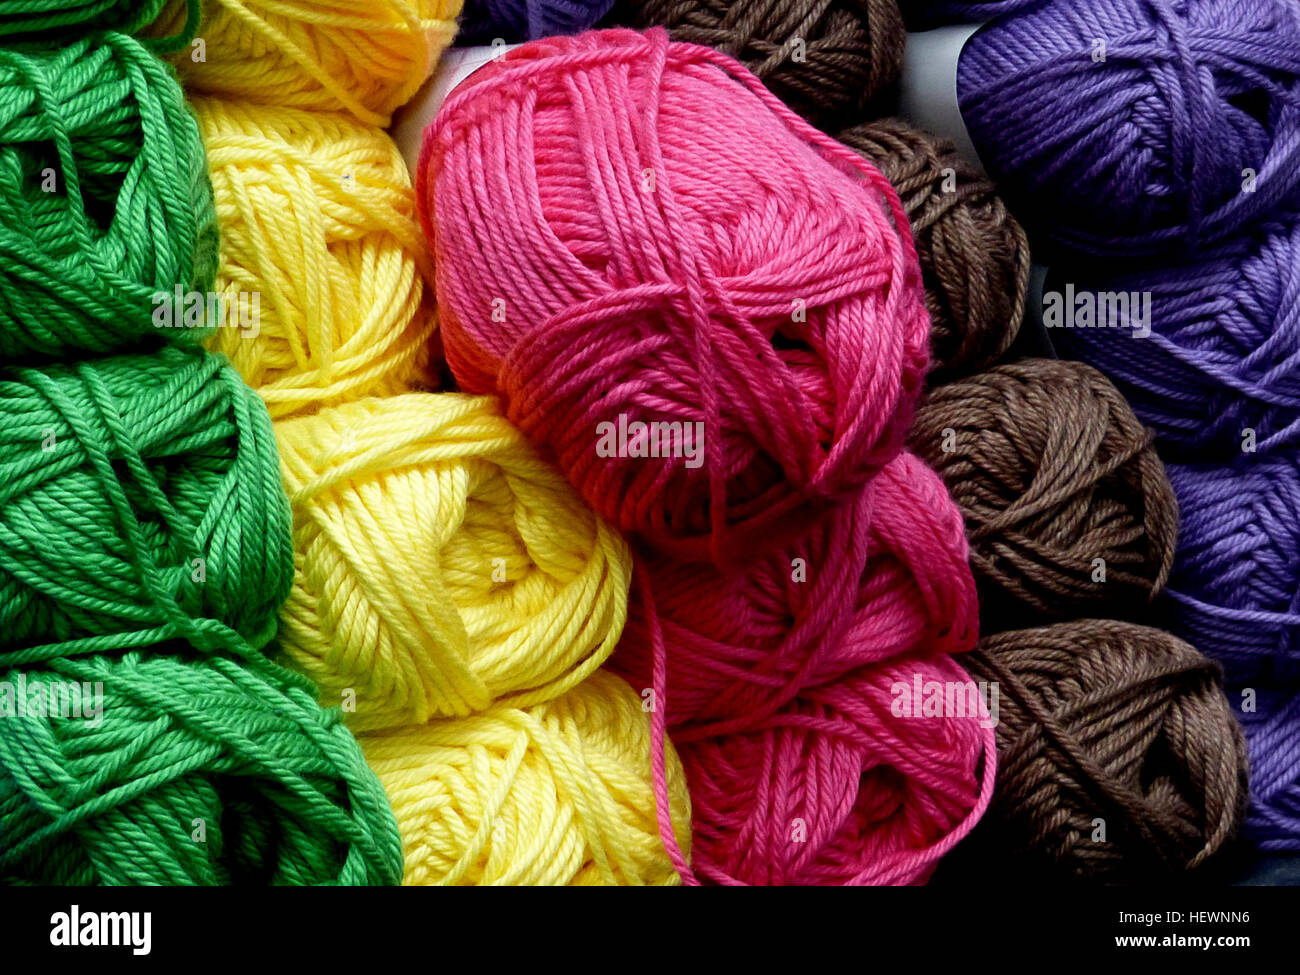 Weaving Yarn Types  Types of yarn, Yarn, Weaving yarn